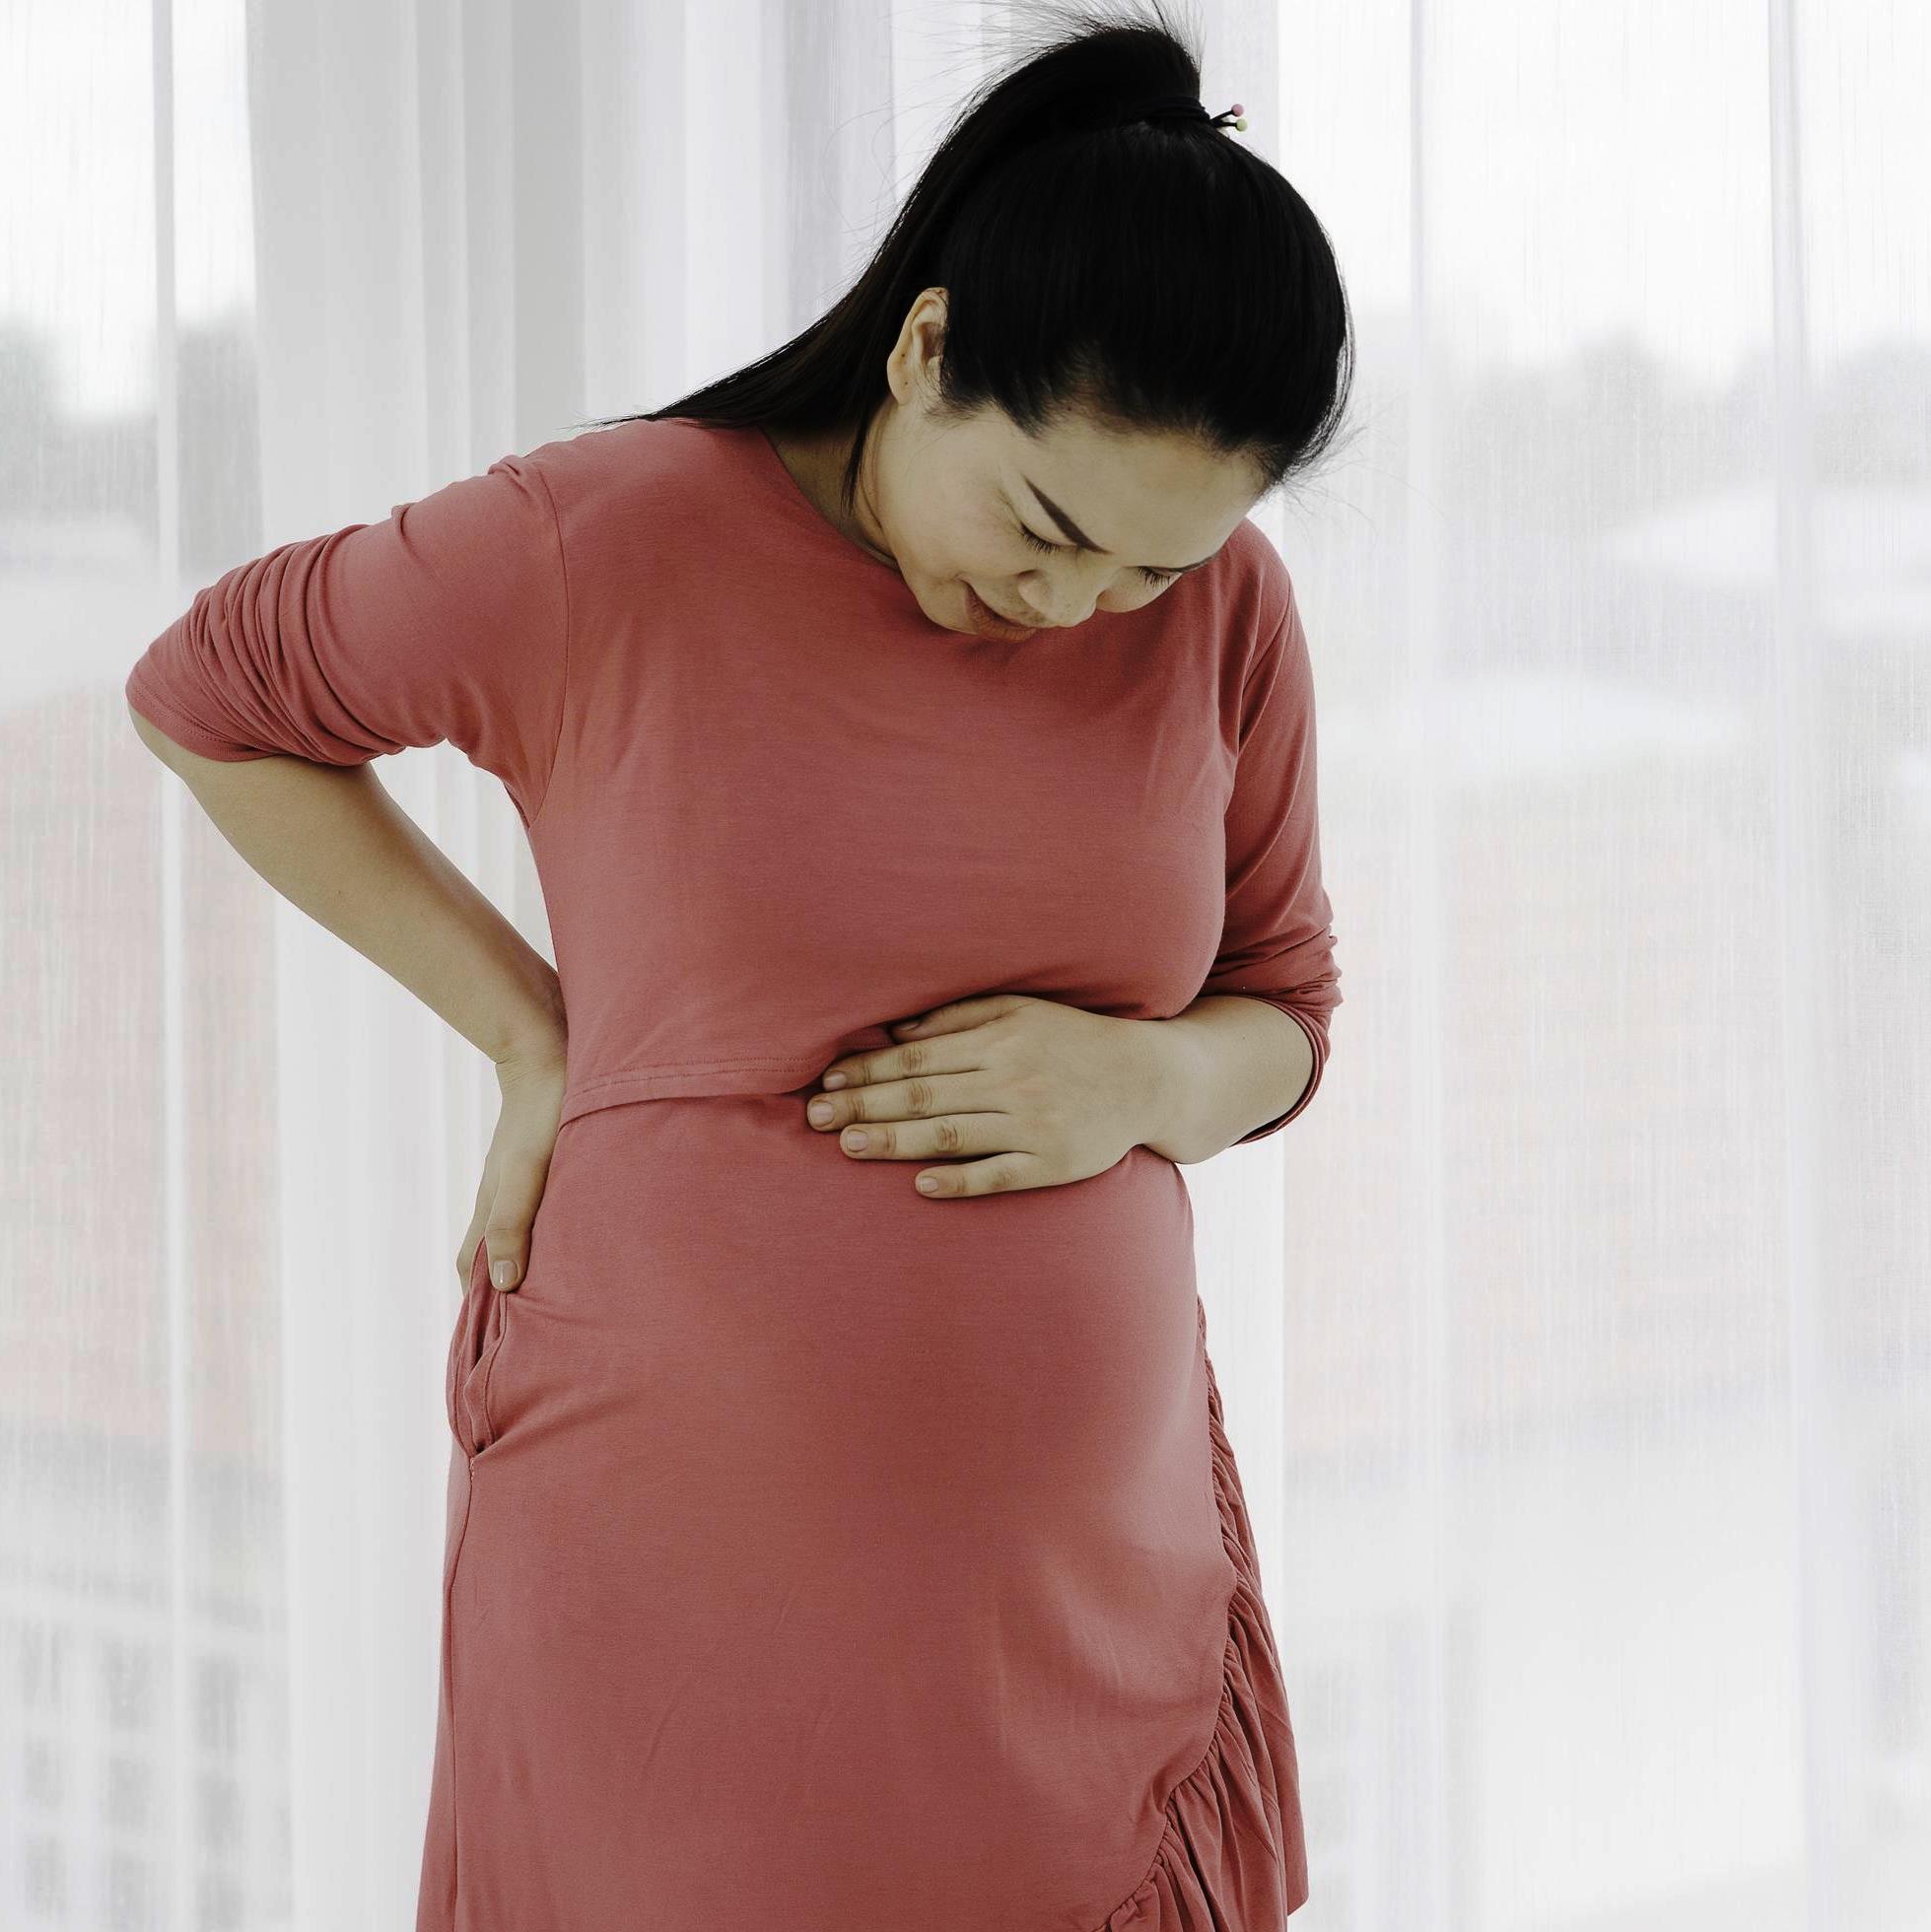 bak pain during pregnancy